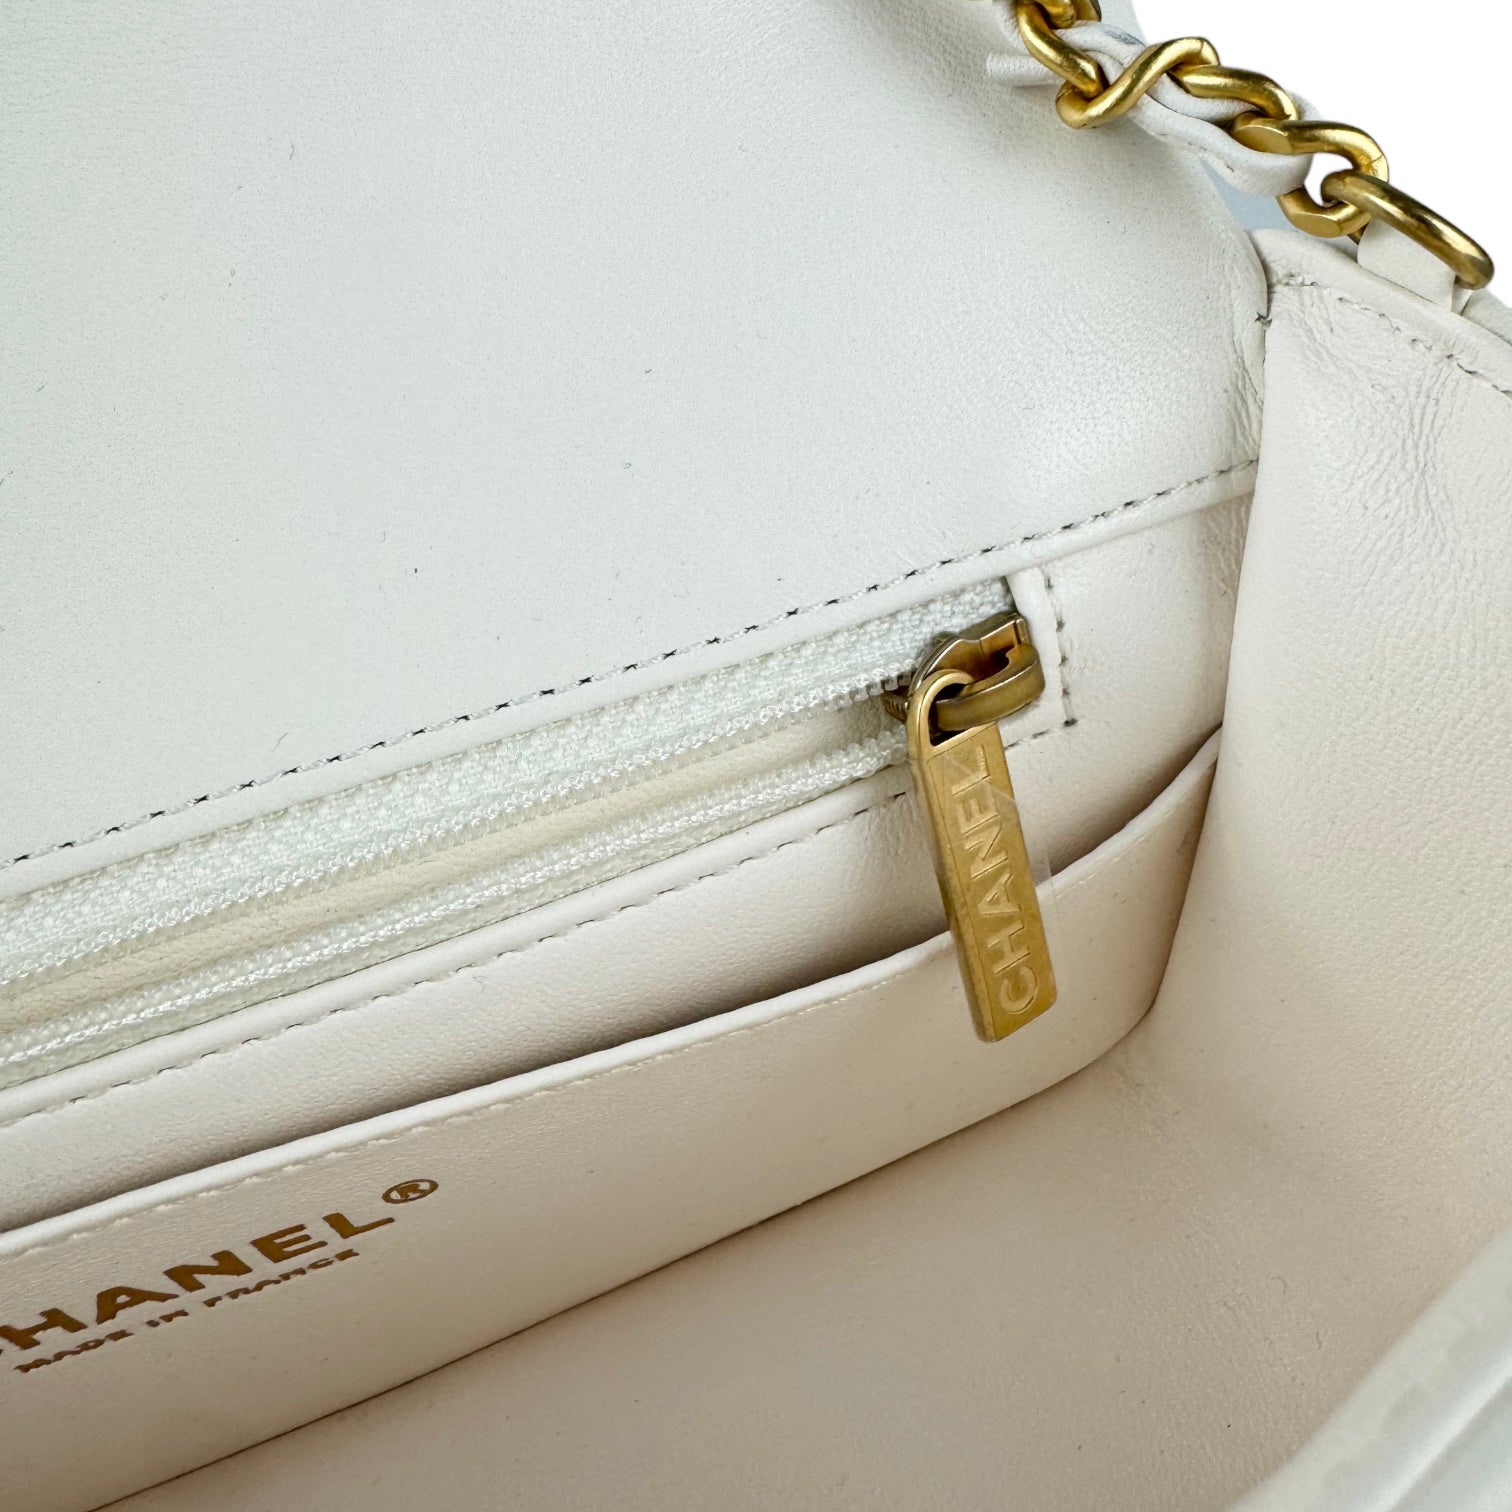 Chanel Classic Mini Rectangular White Lambskin Gold